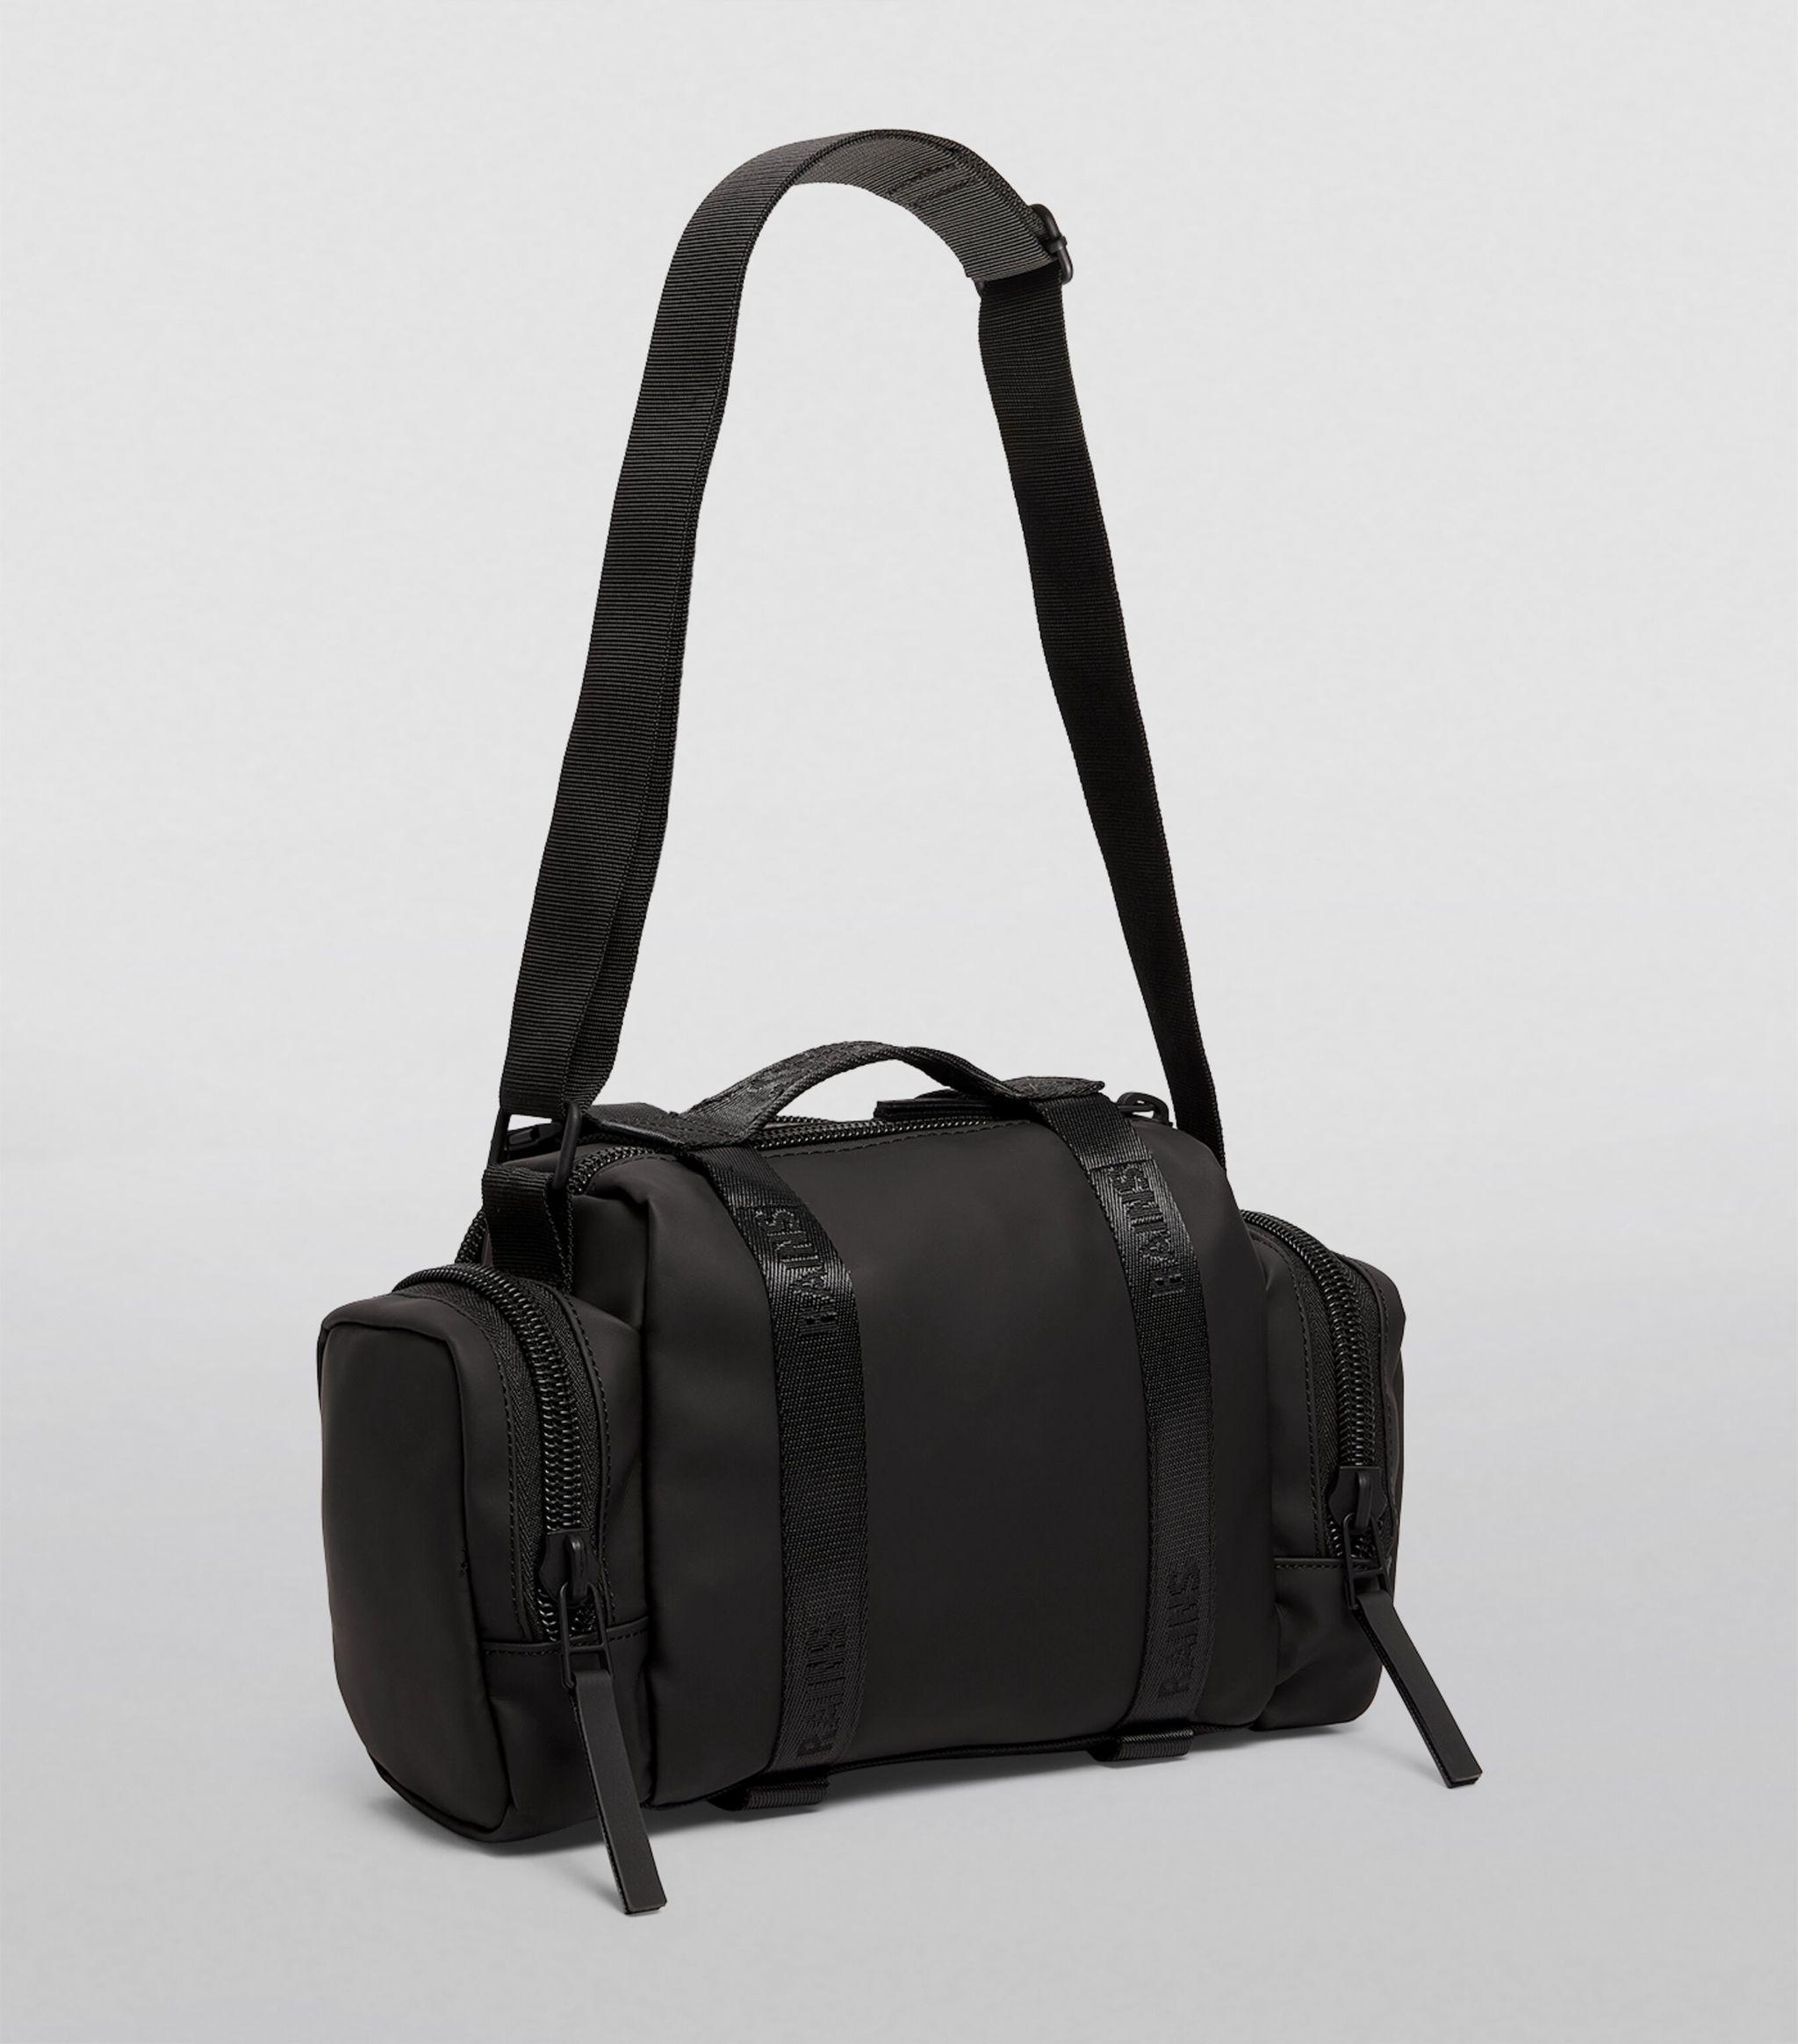 Rains® Hilo Weekend Bag in Black for $110